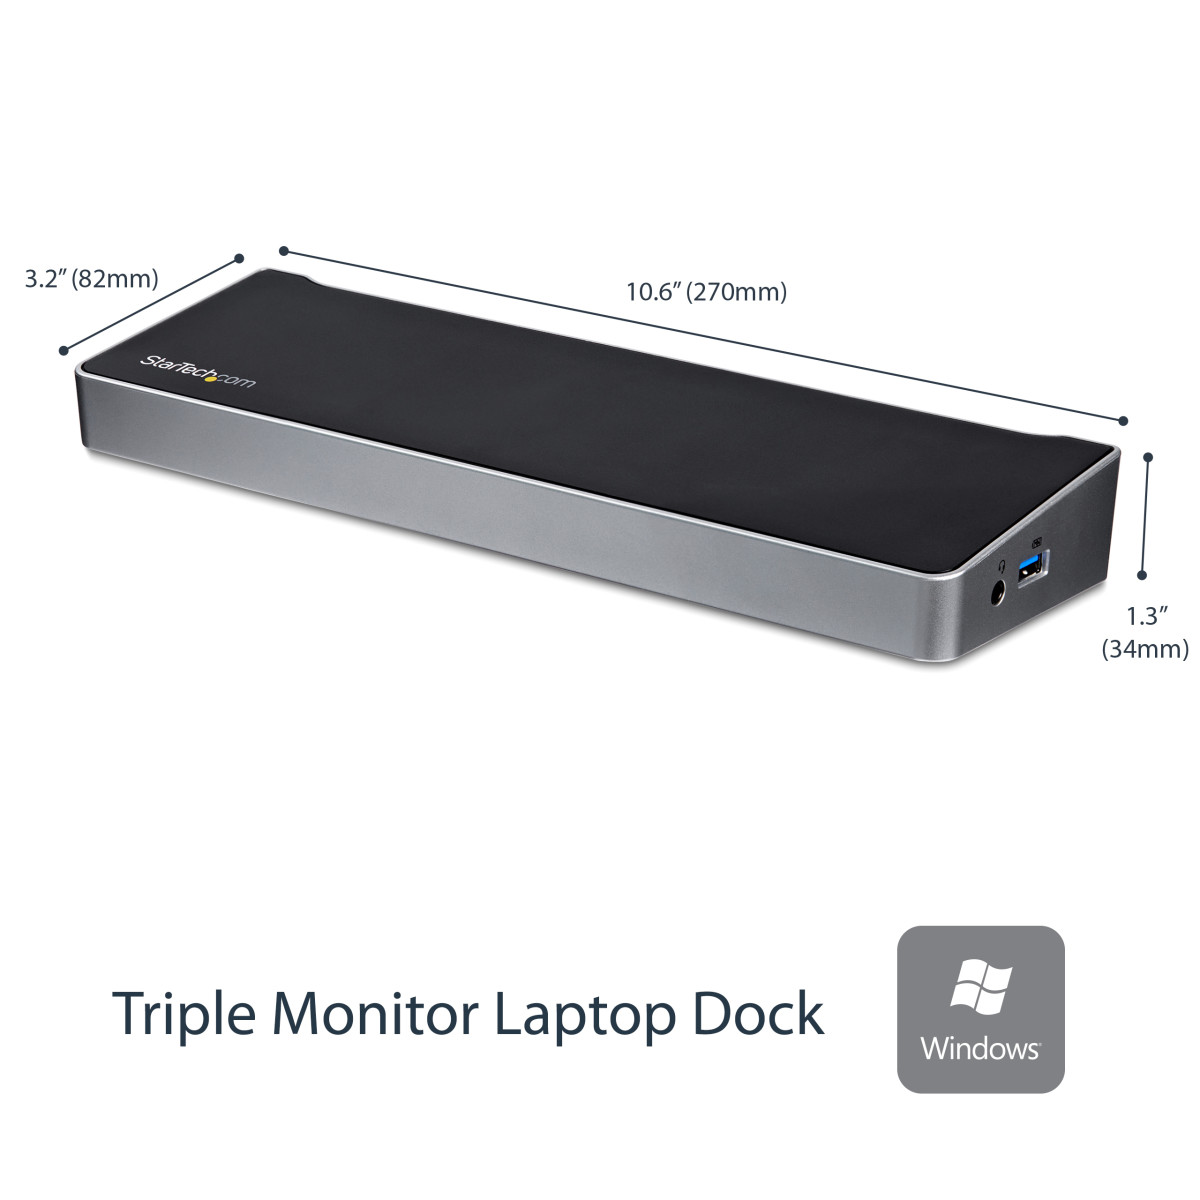 Triple-Video Docking Station for Laptops